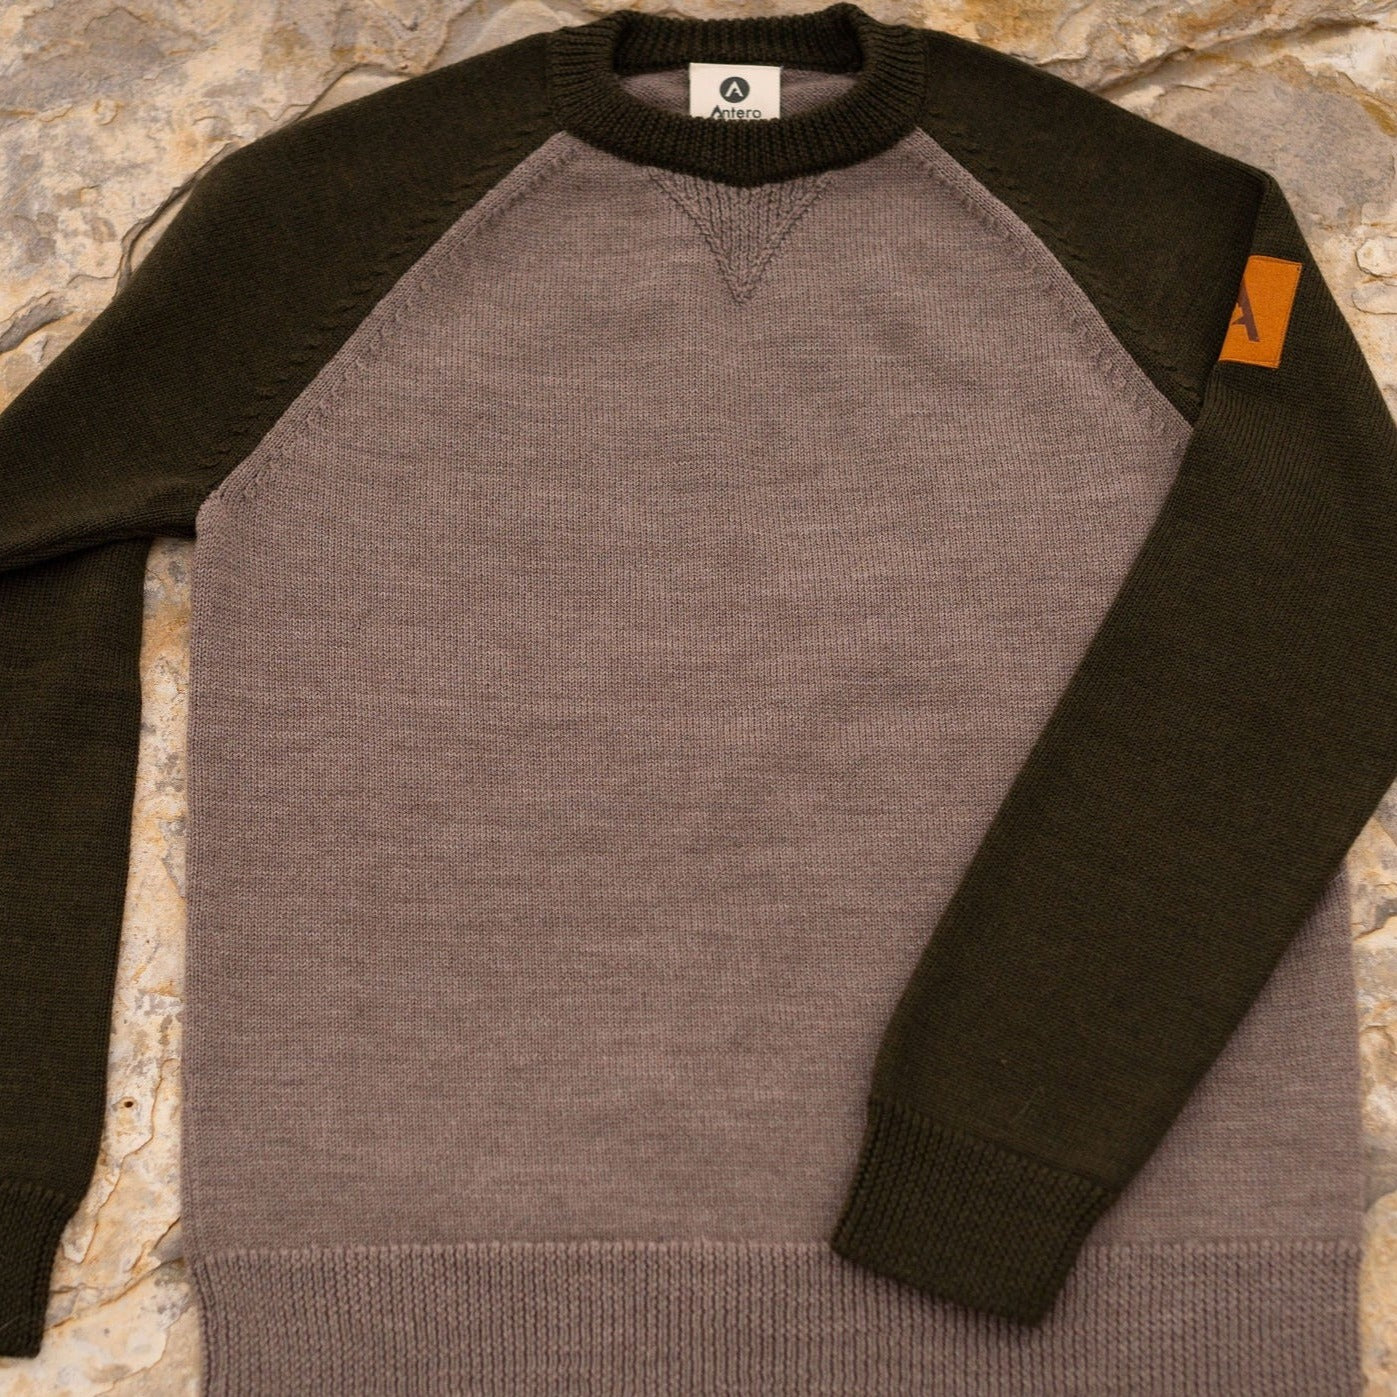 Colorado Merino Wool Sweater - Olive / Taupe